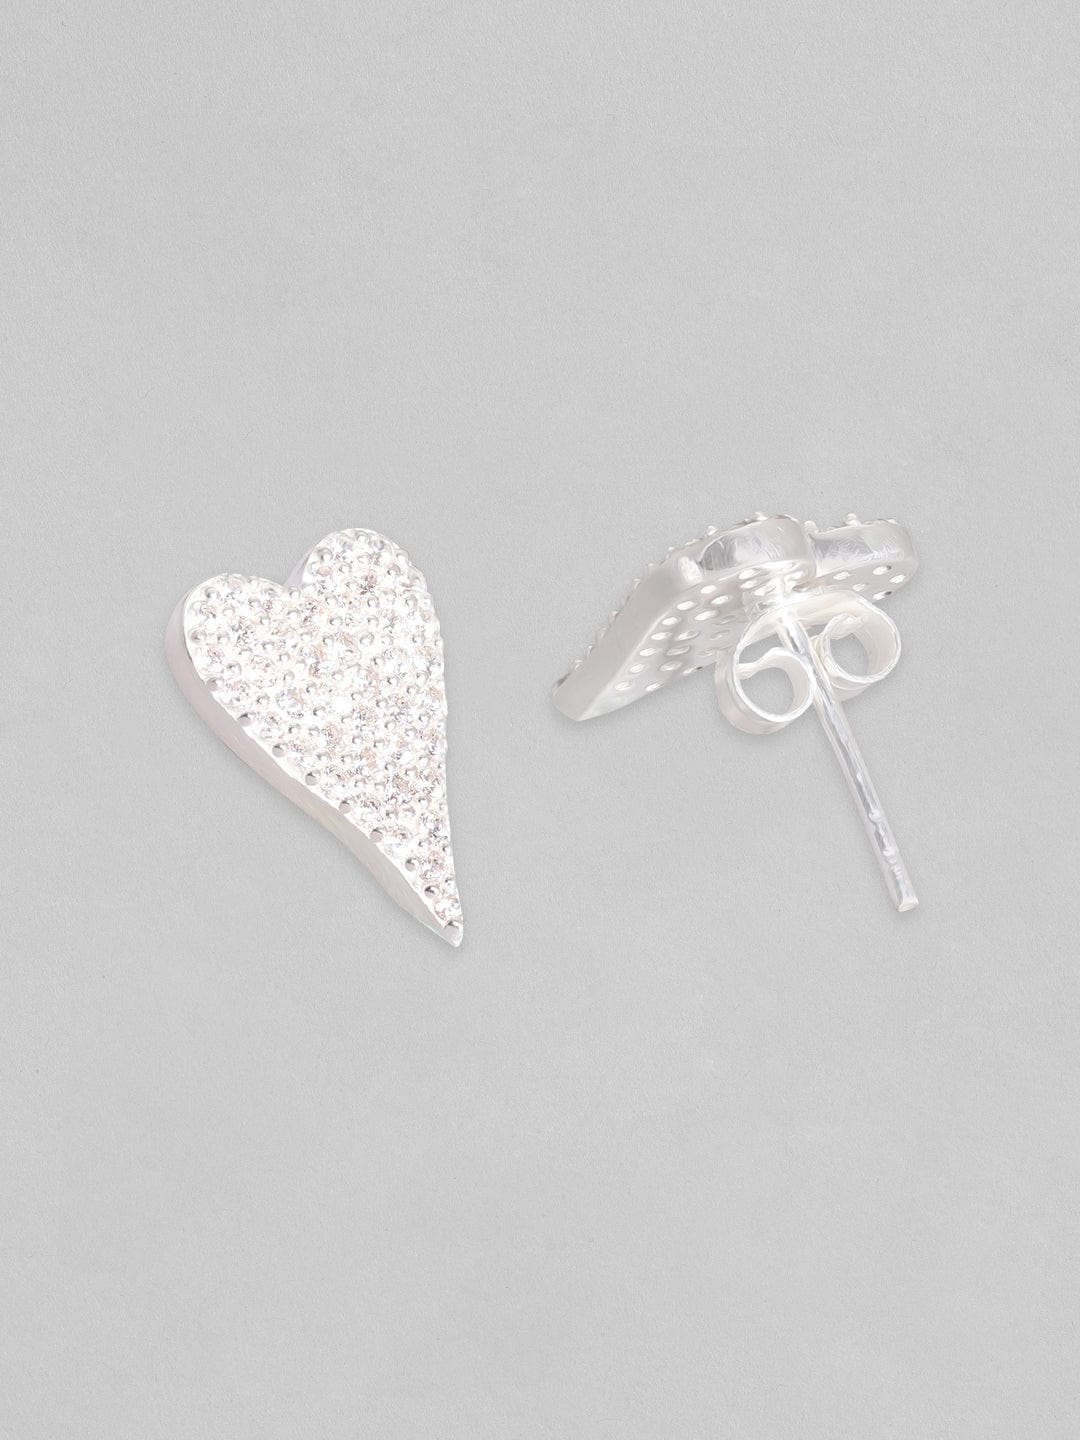 Rubans 925 Silver, Rhodium Plated Pave Zircons Studded Heart Motif Stud Earrings. Earrings